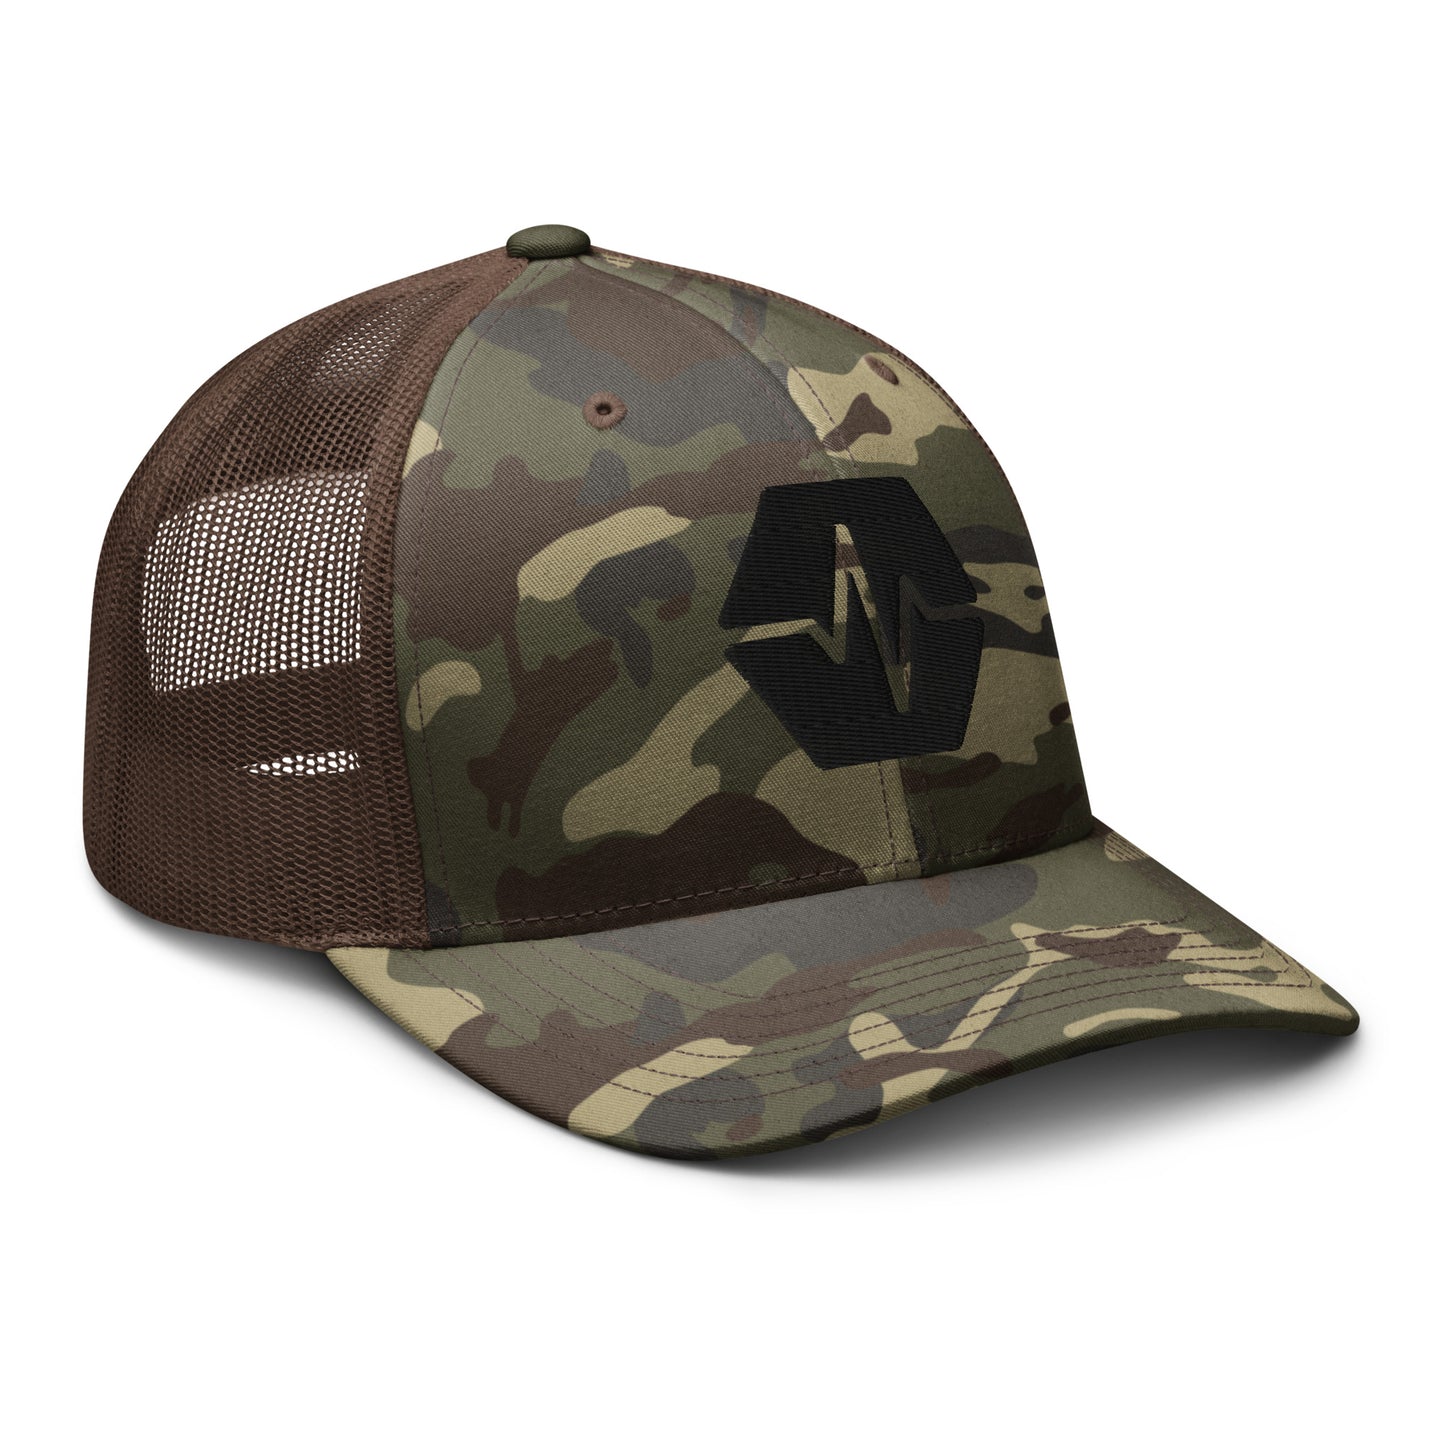 PulseChain Camouflage Trucker Hat (Embroidered)